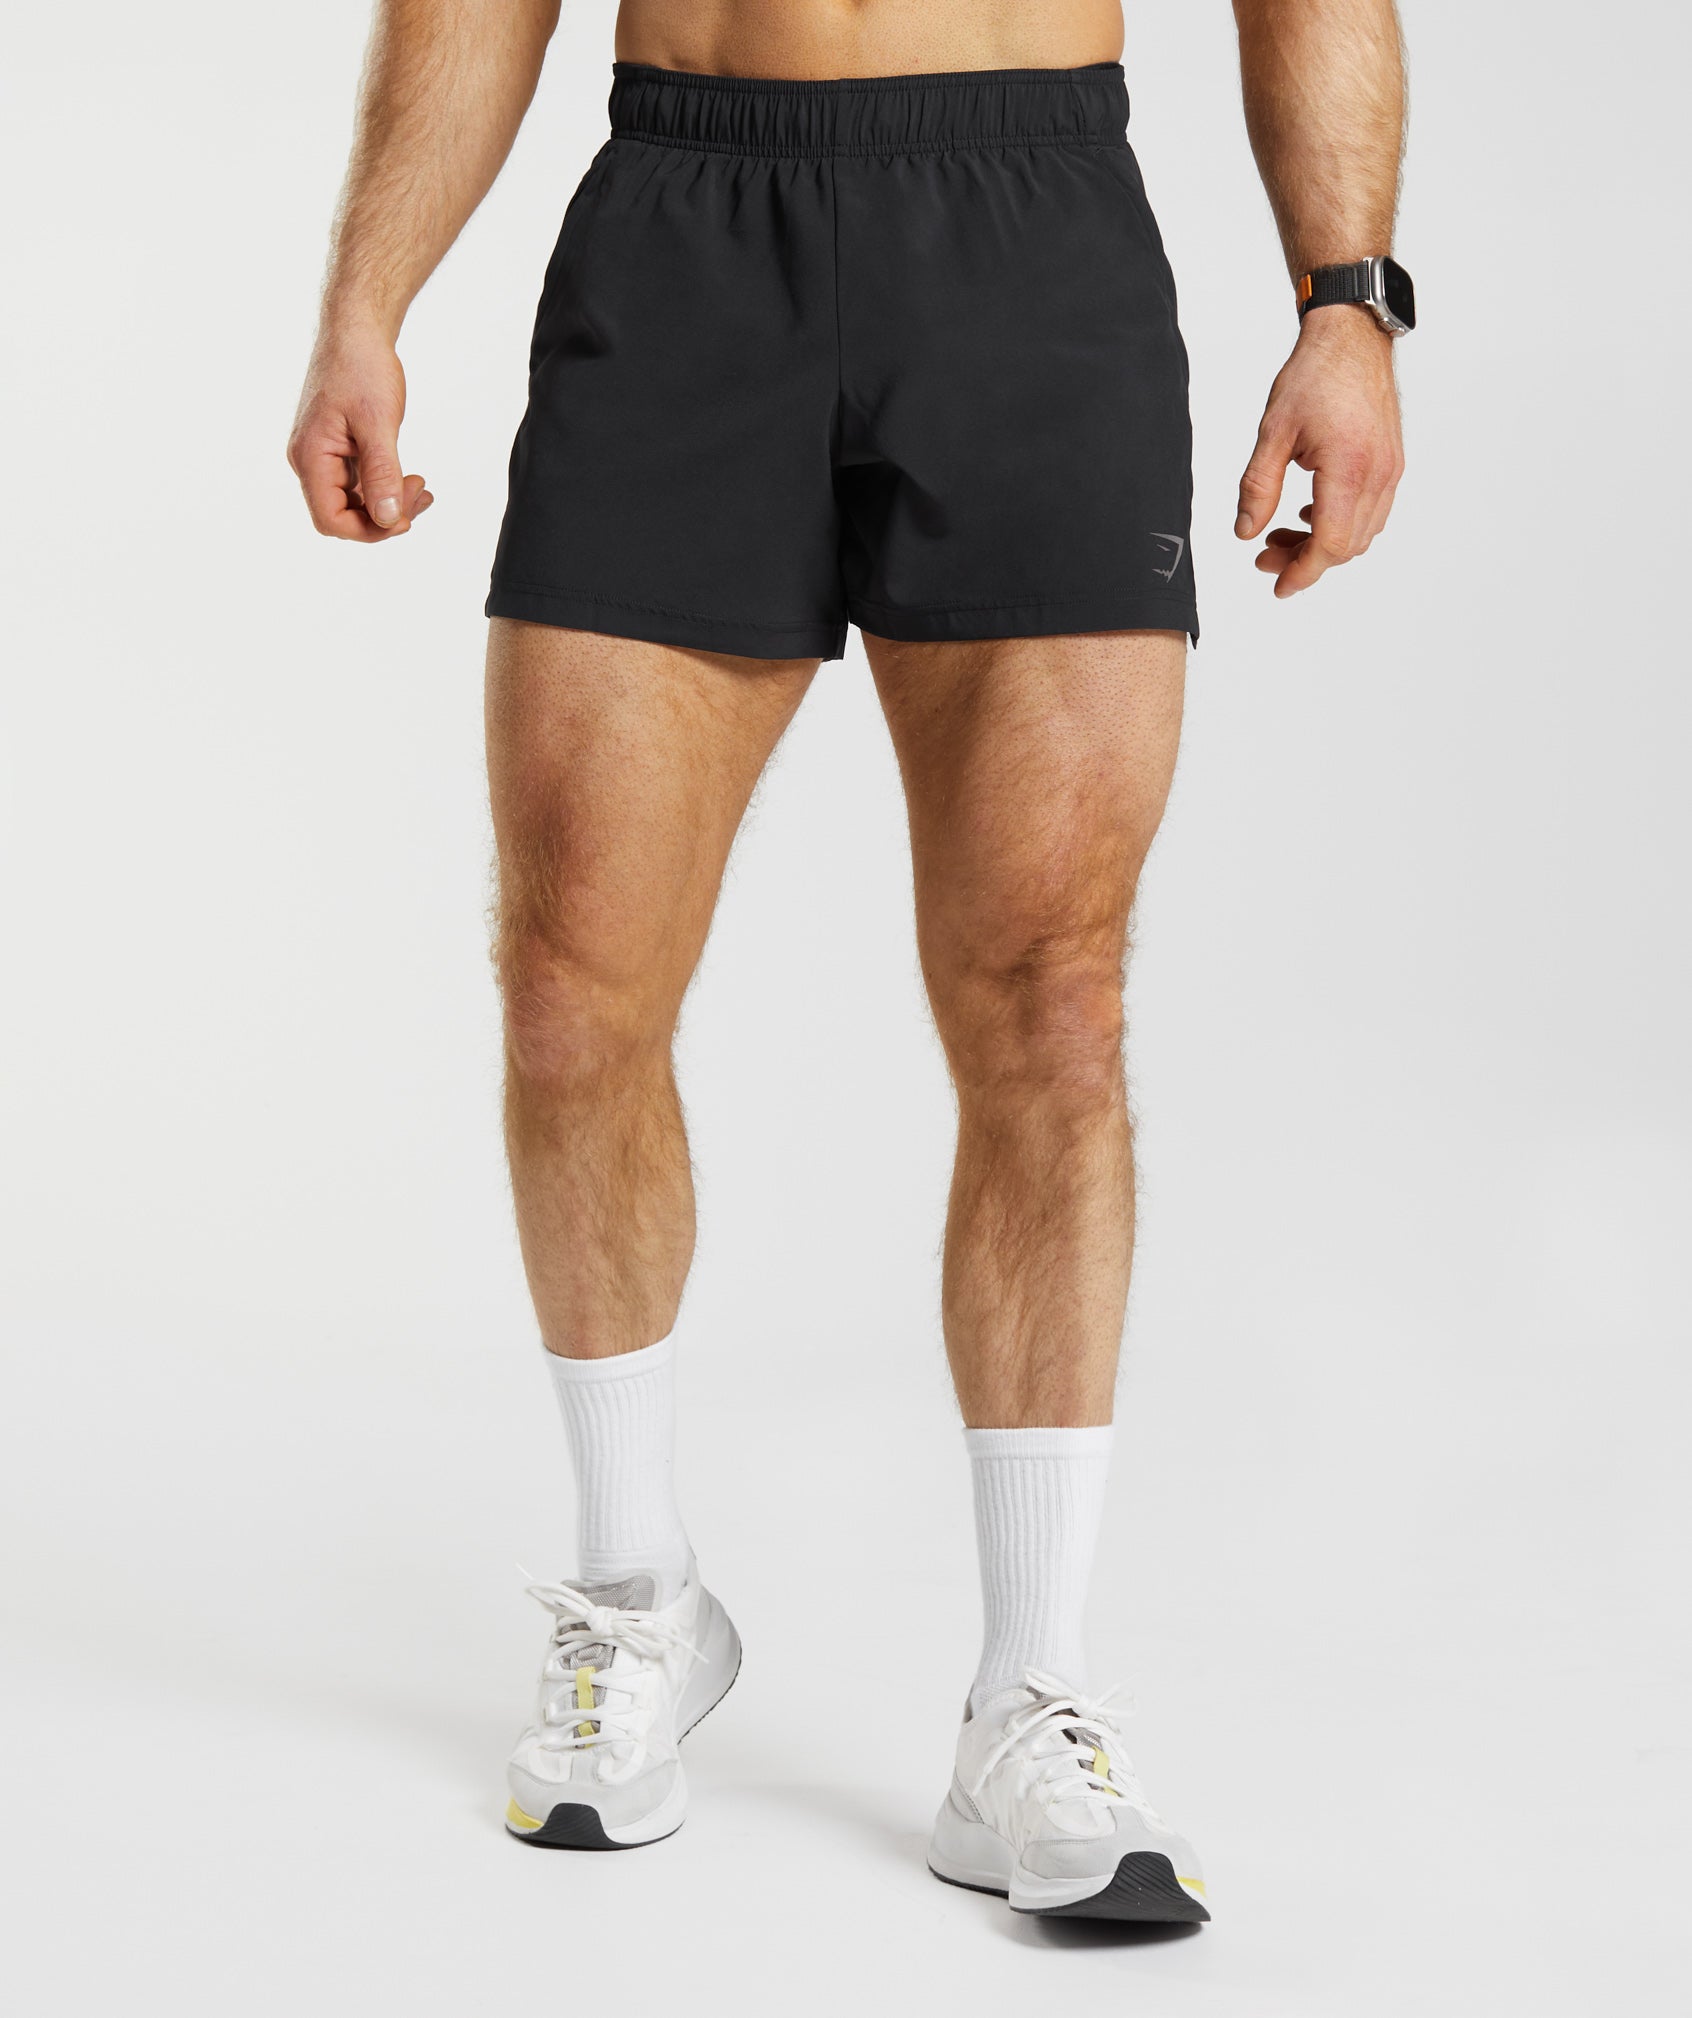 Sport Vent - Sports Shorts for Men